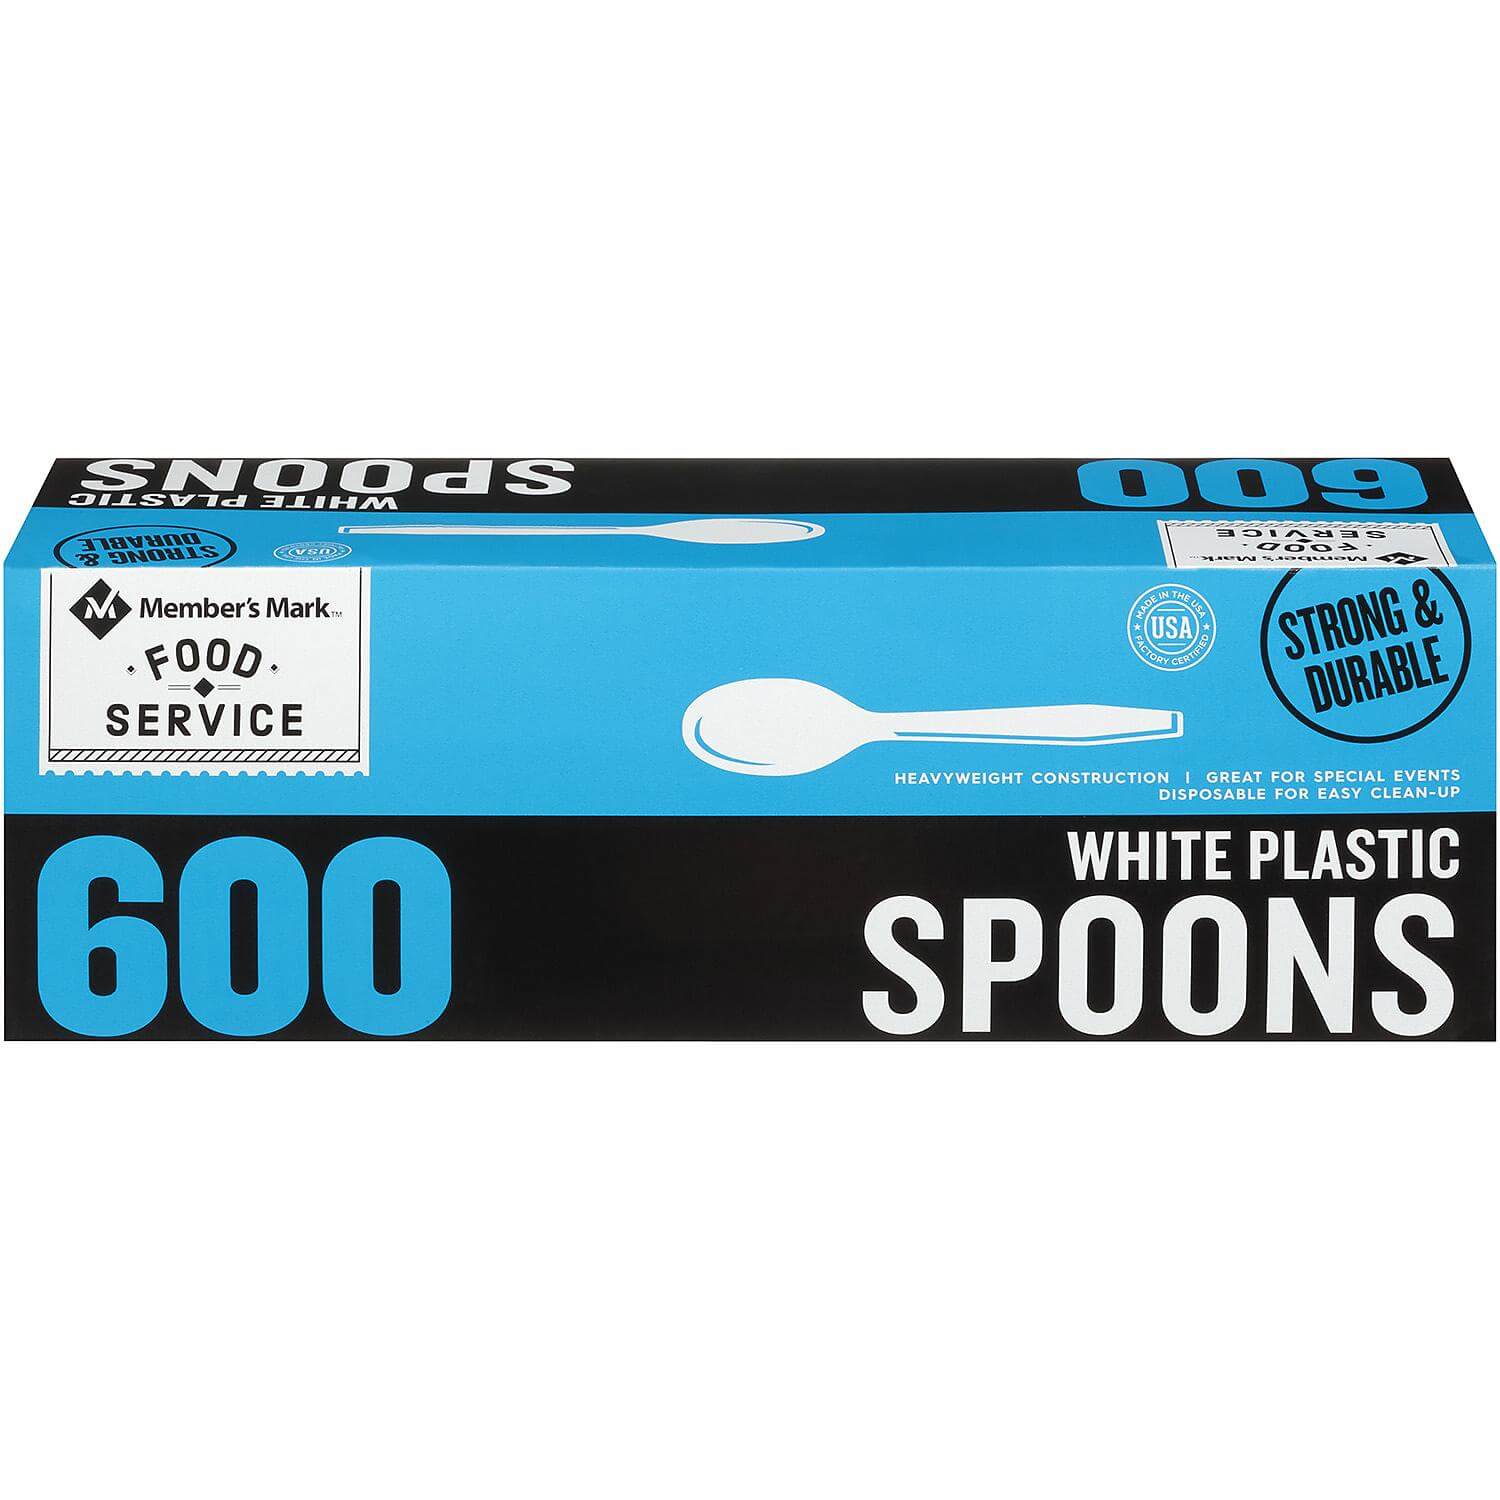 Bulk Spoons White 600ct thumbnail